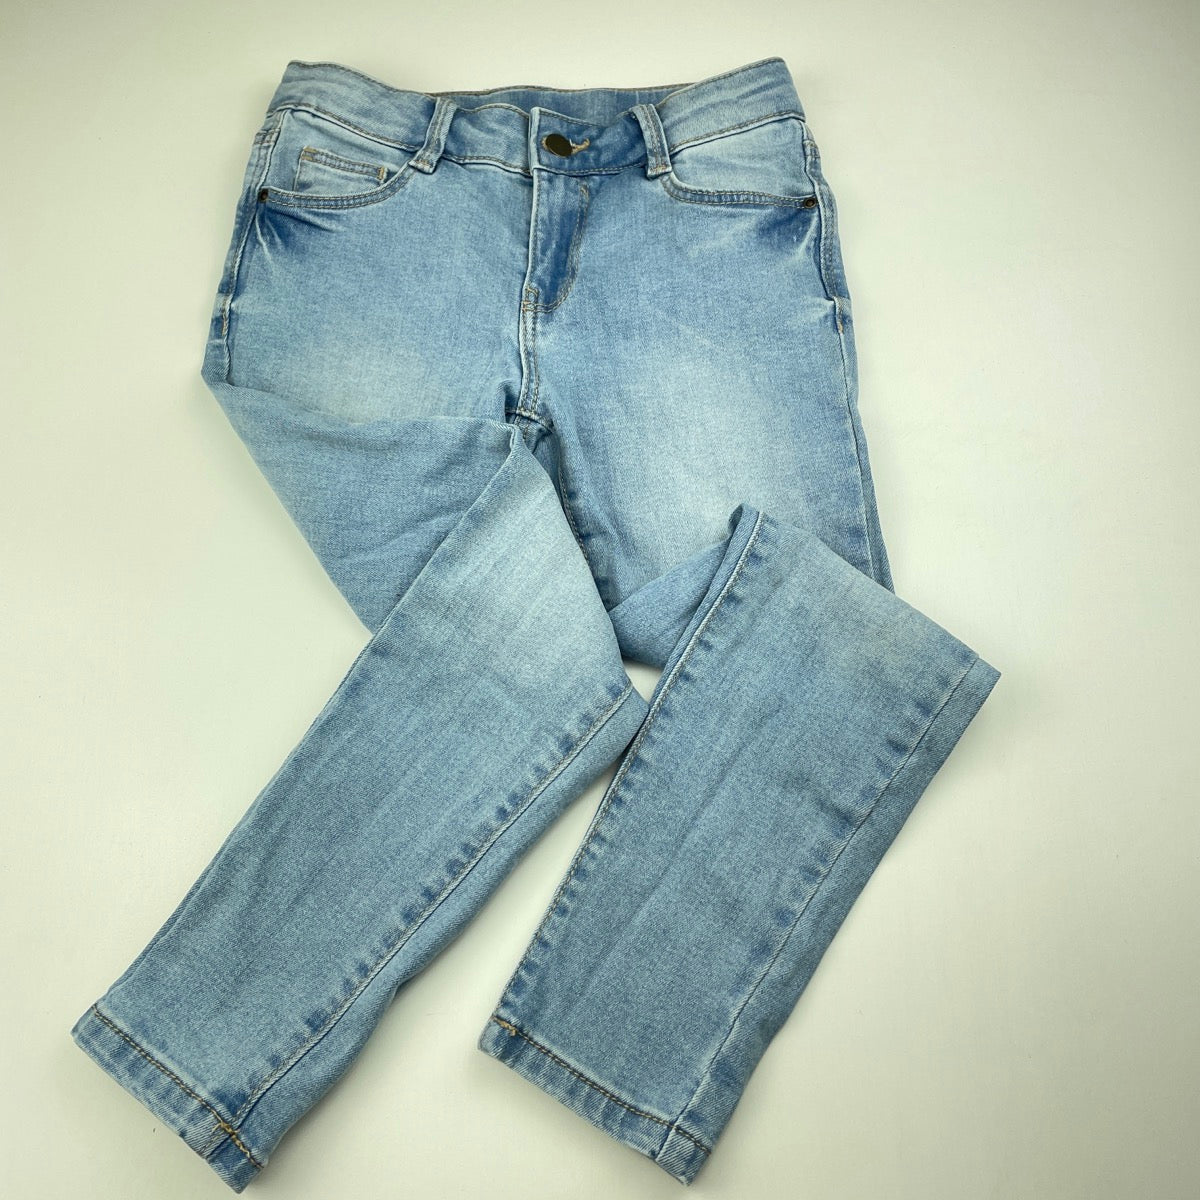 Anko, blue stretch denim jeans, adjustable, Inside leg: 52.5cm